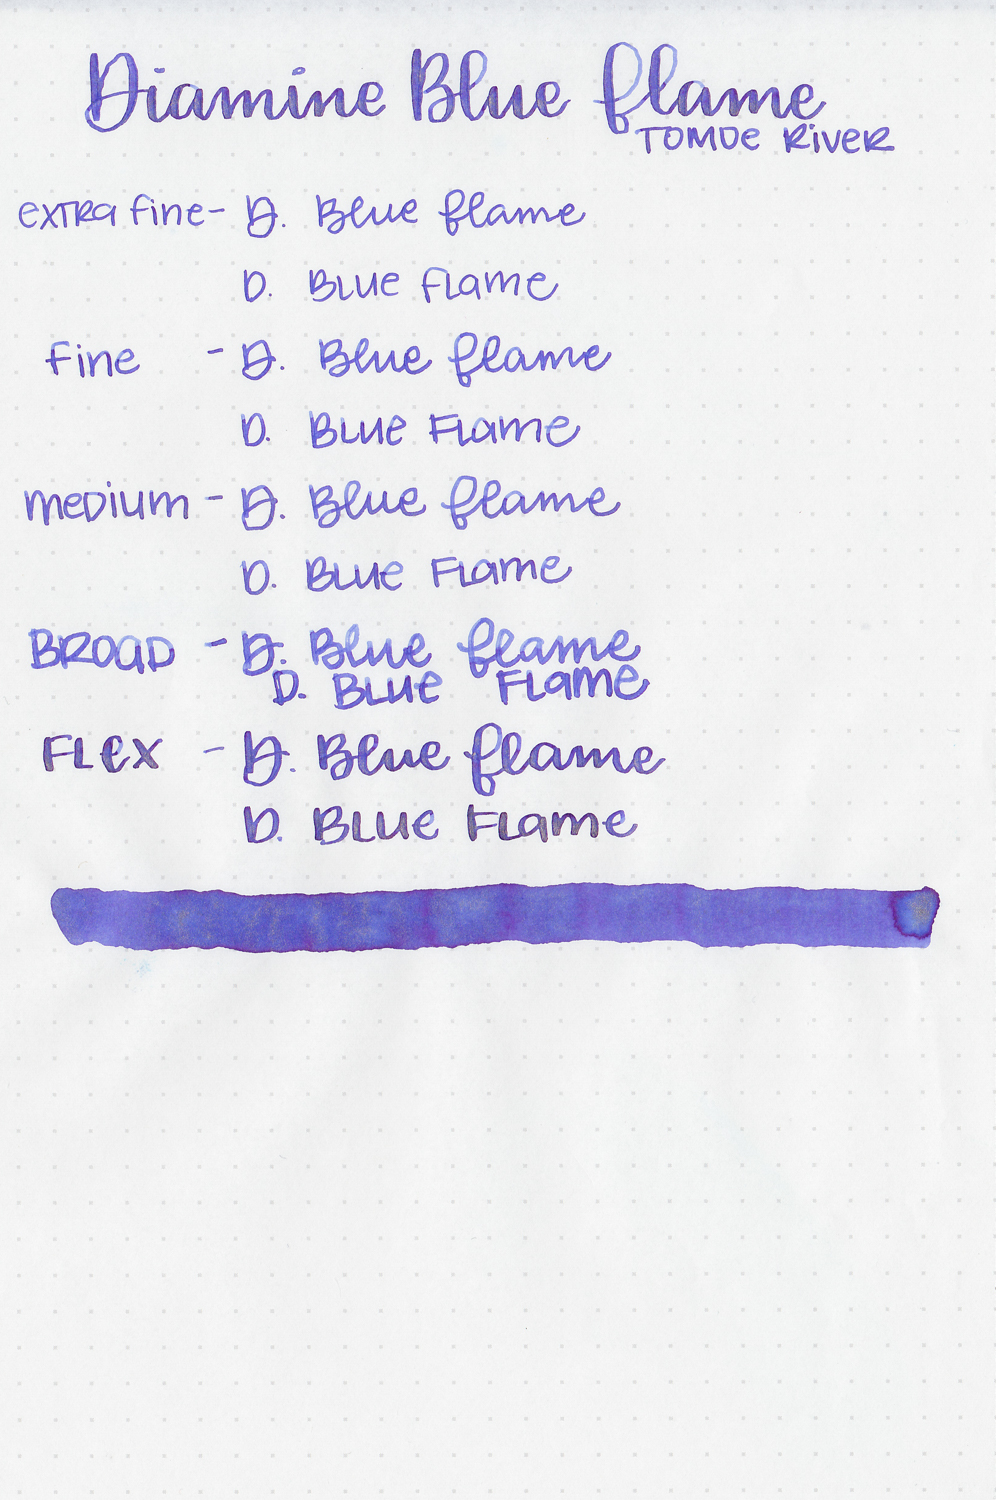 d-blue-flame-5.jpg